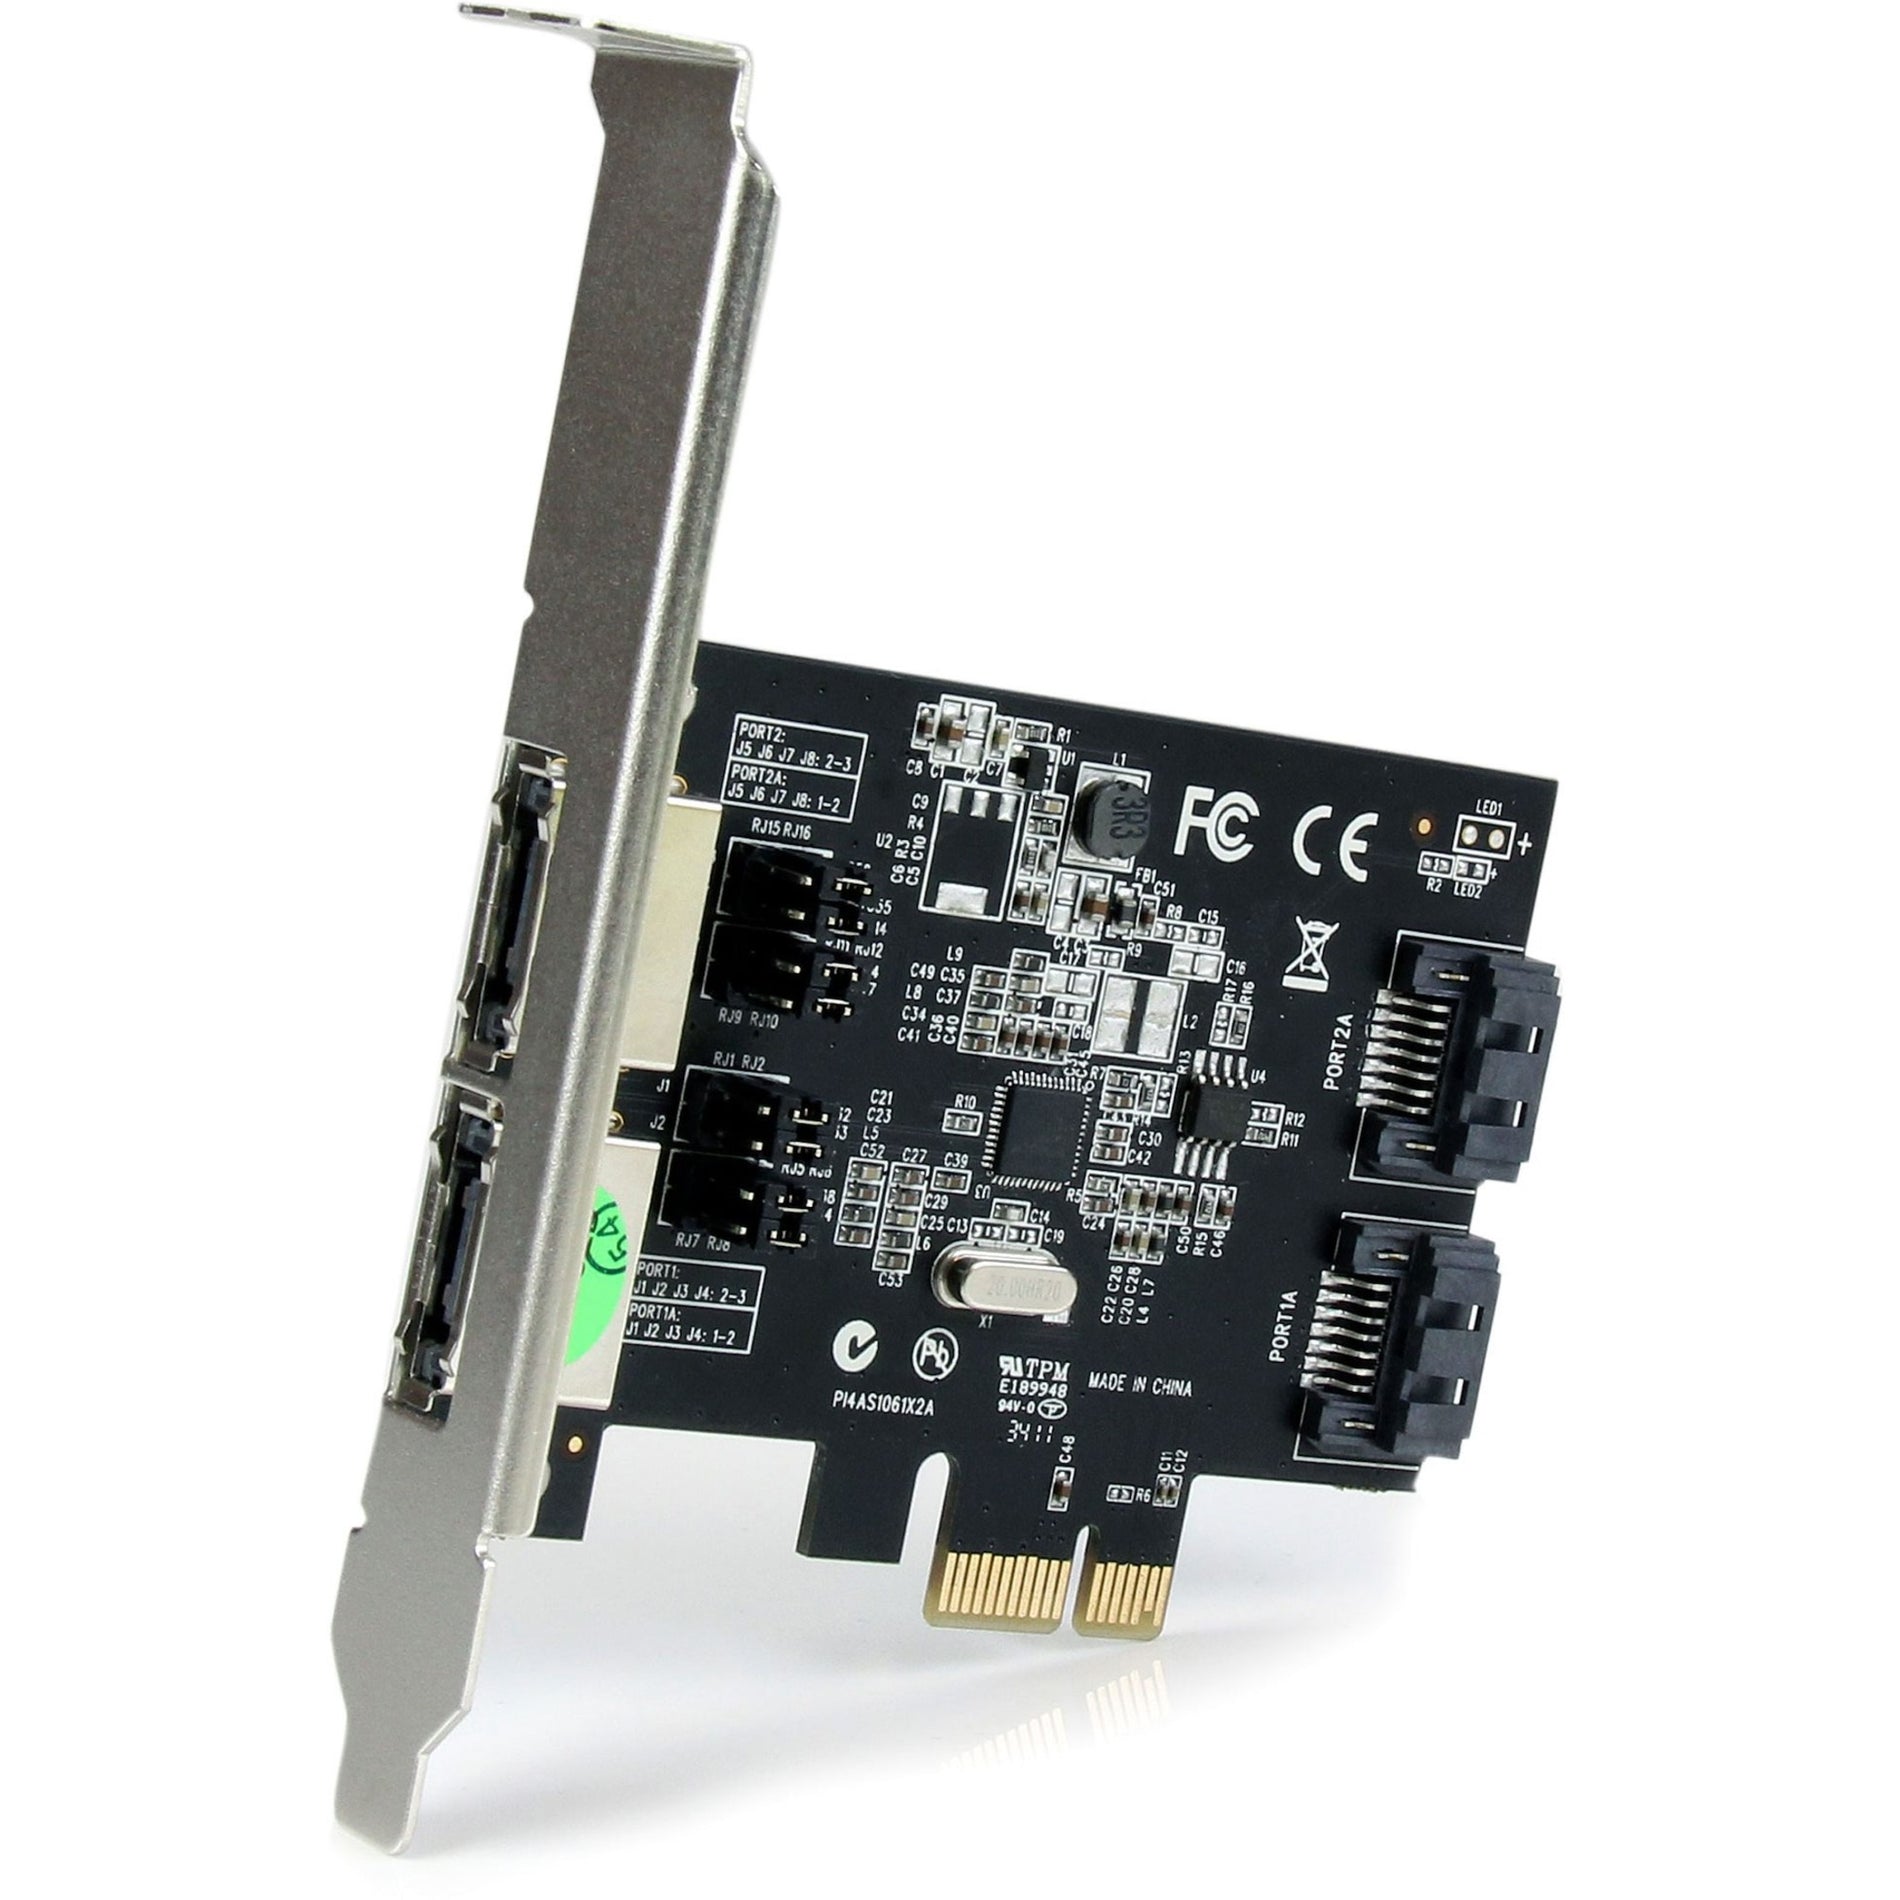 StarTech.com PEXESAT322I PCIe SATA Controller, Dual Port PCIe SATA III Card - 2 Int/2 Ext, 2 Port PCI Express SATA 6 Gbps eSATA Controller Card